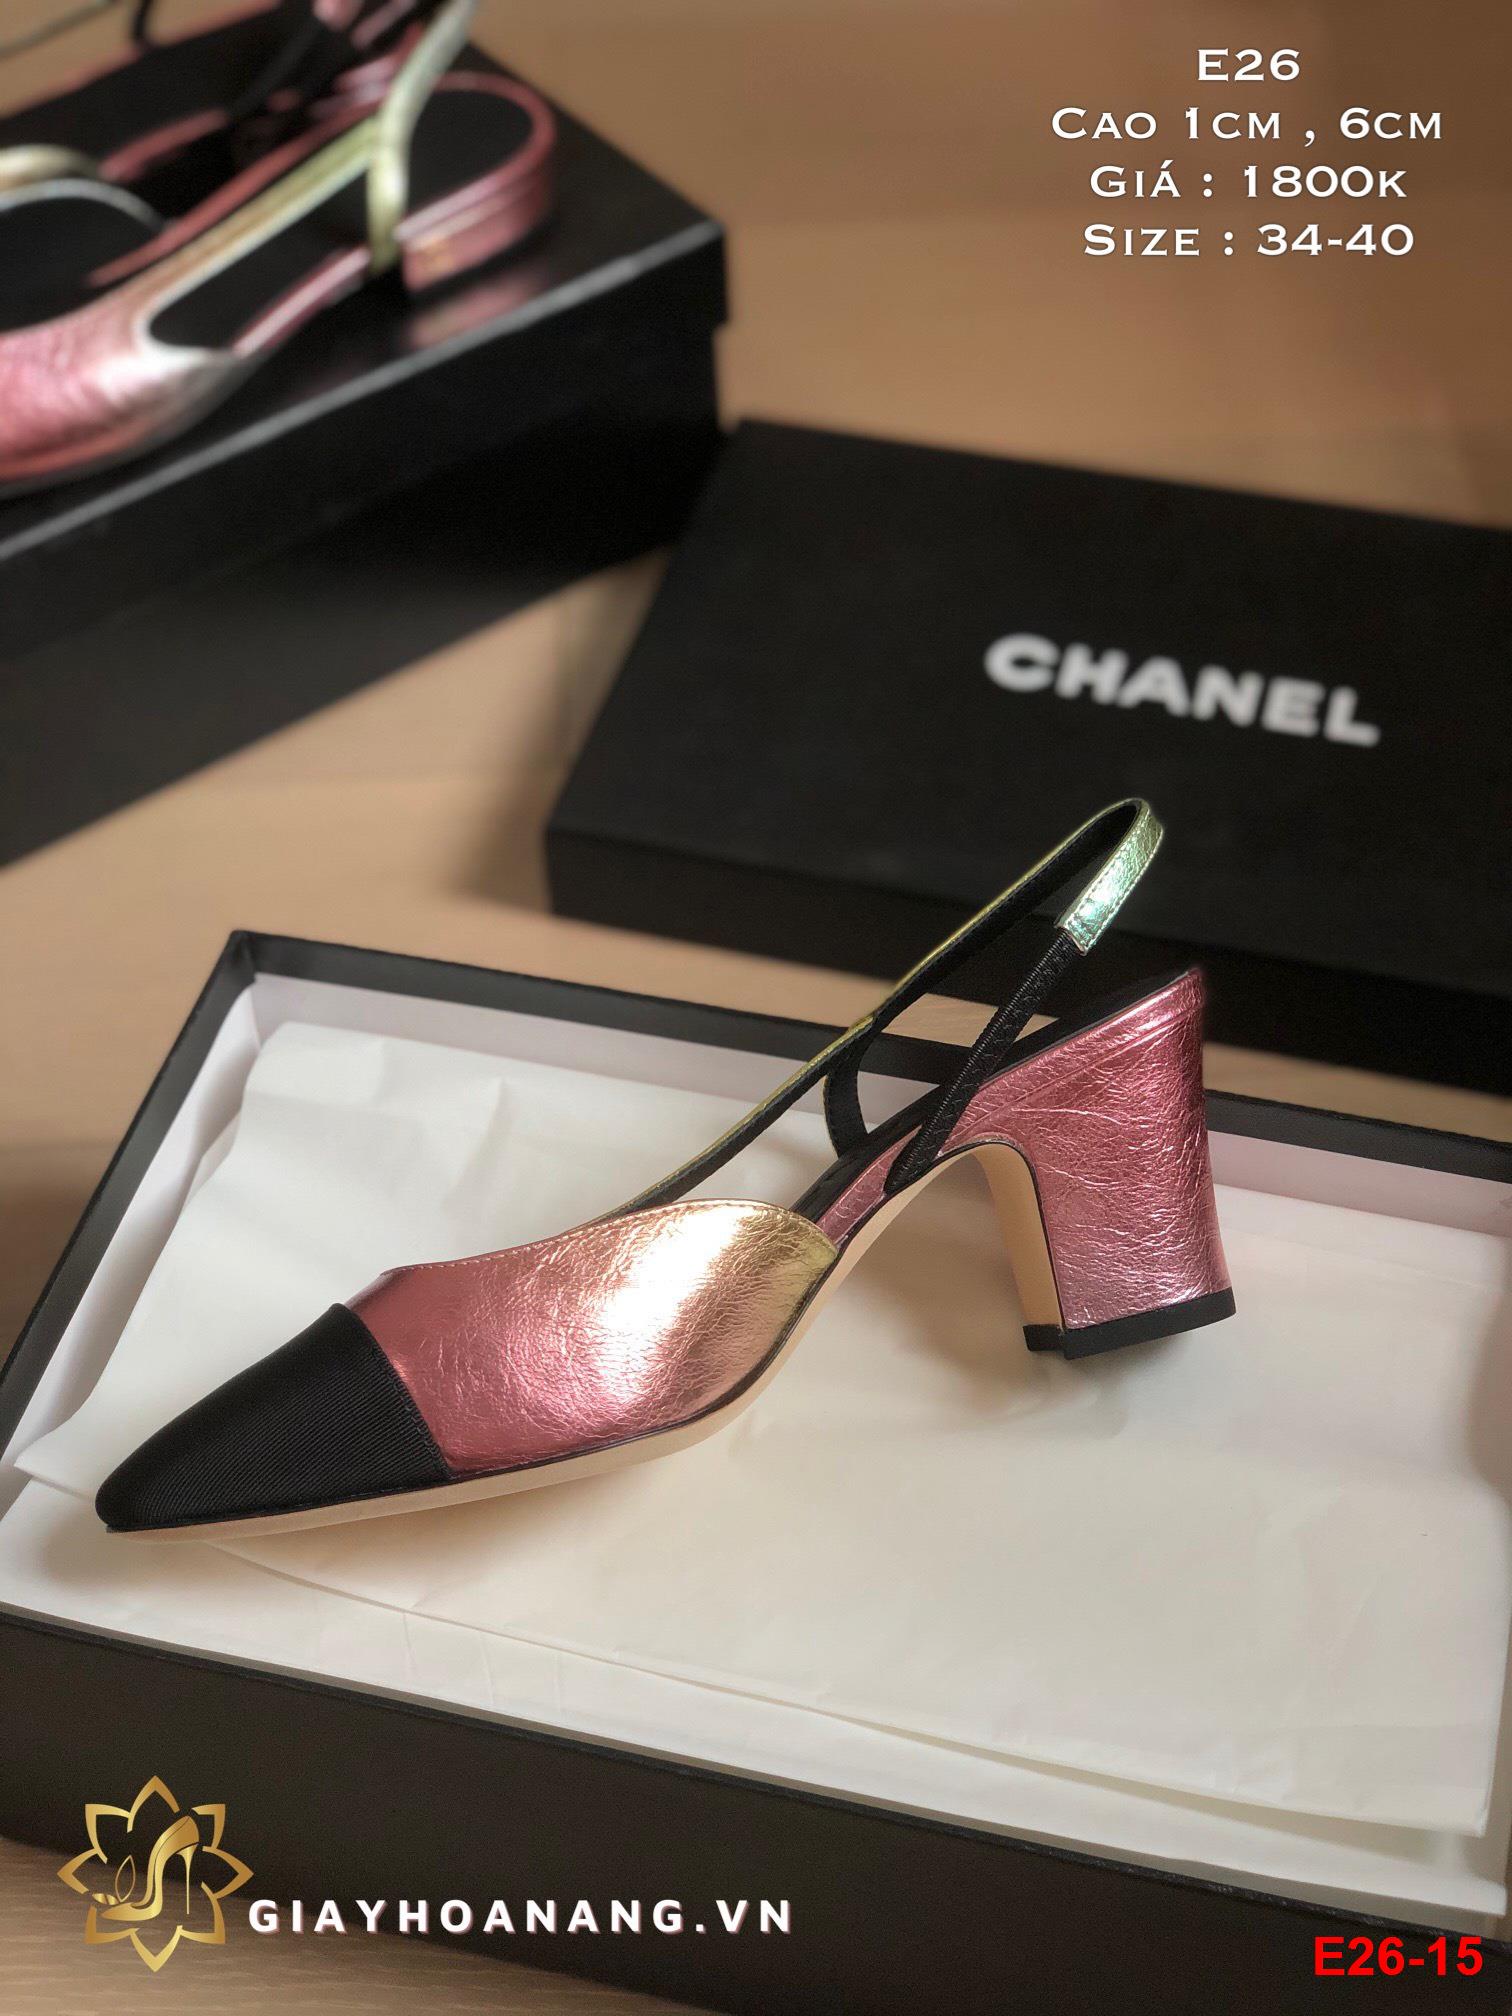 E26-15 Chanel sandal cao 1cm , 6cm siêu cấp